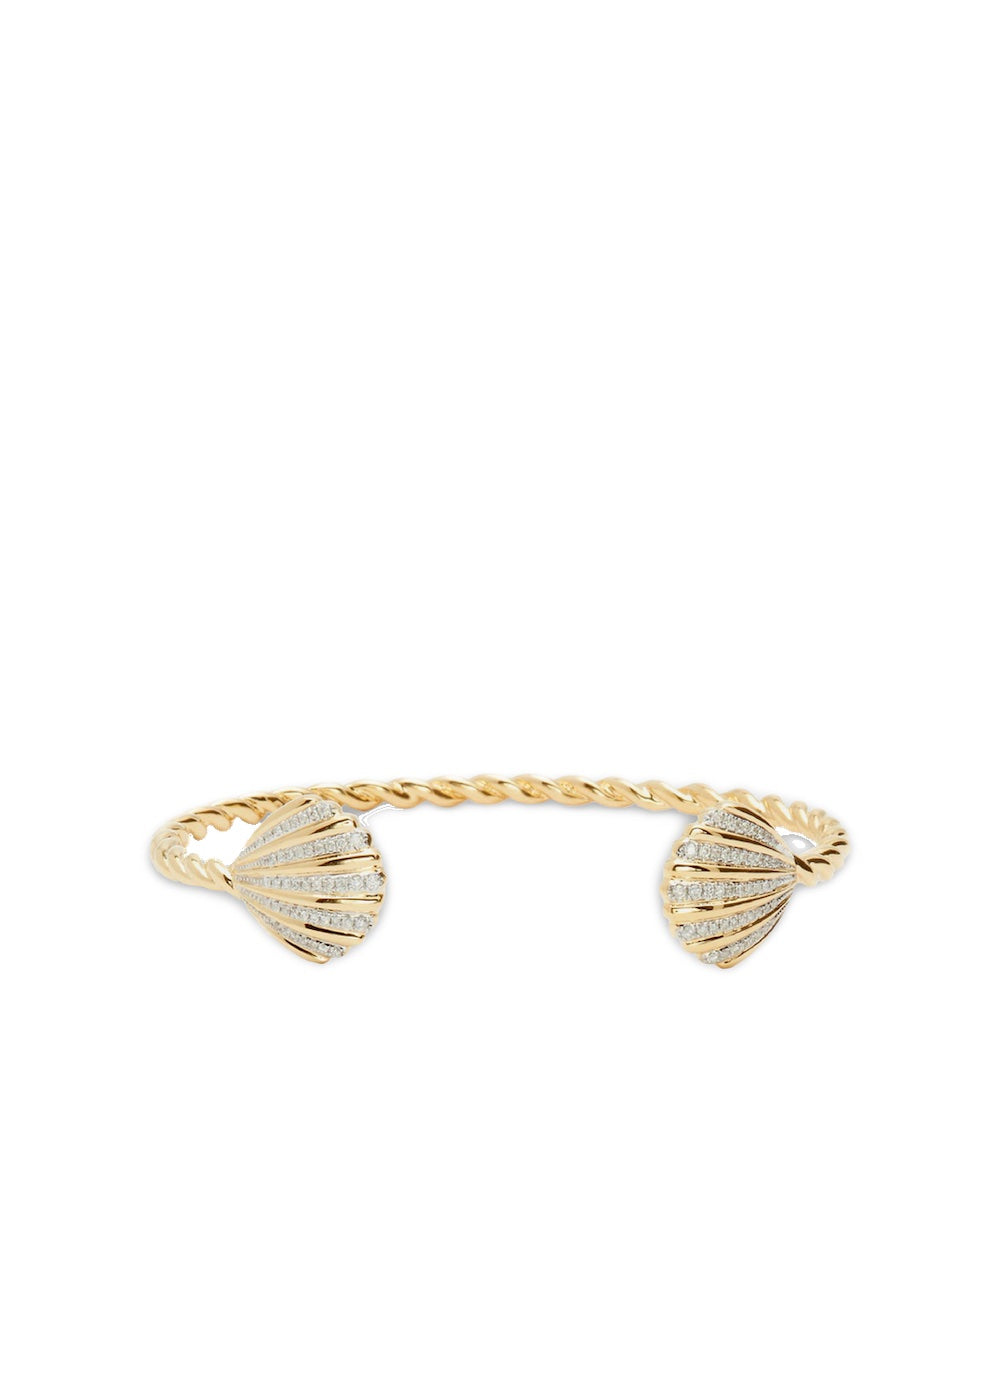 Coquillage 18k yellow gold diamond bracelet